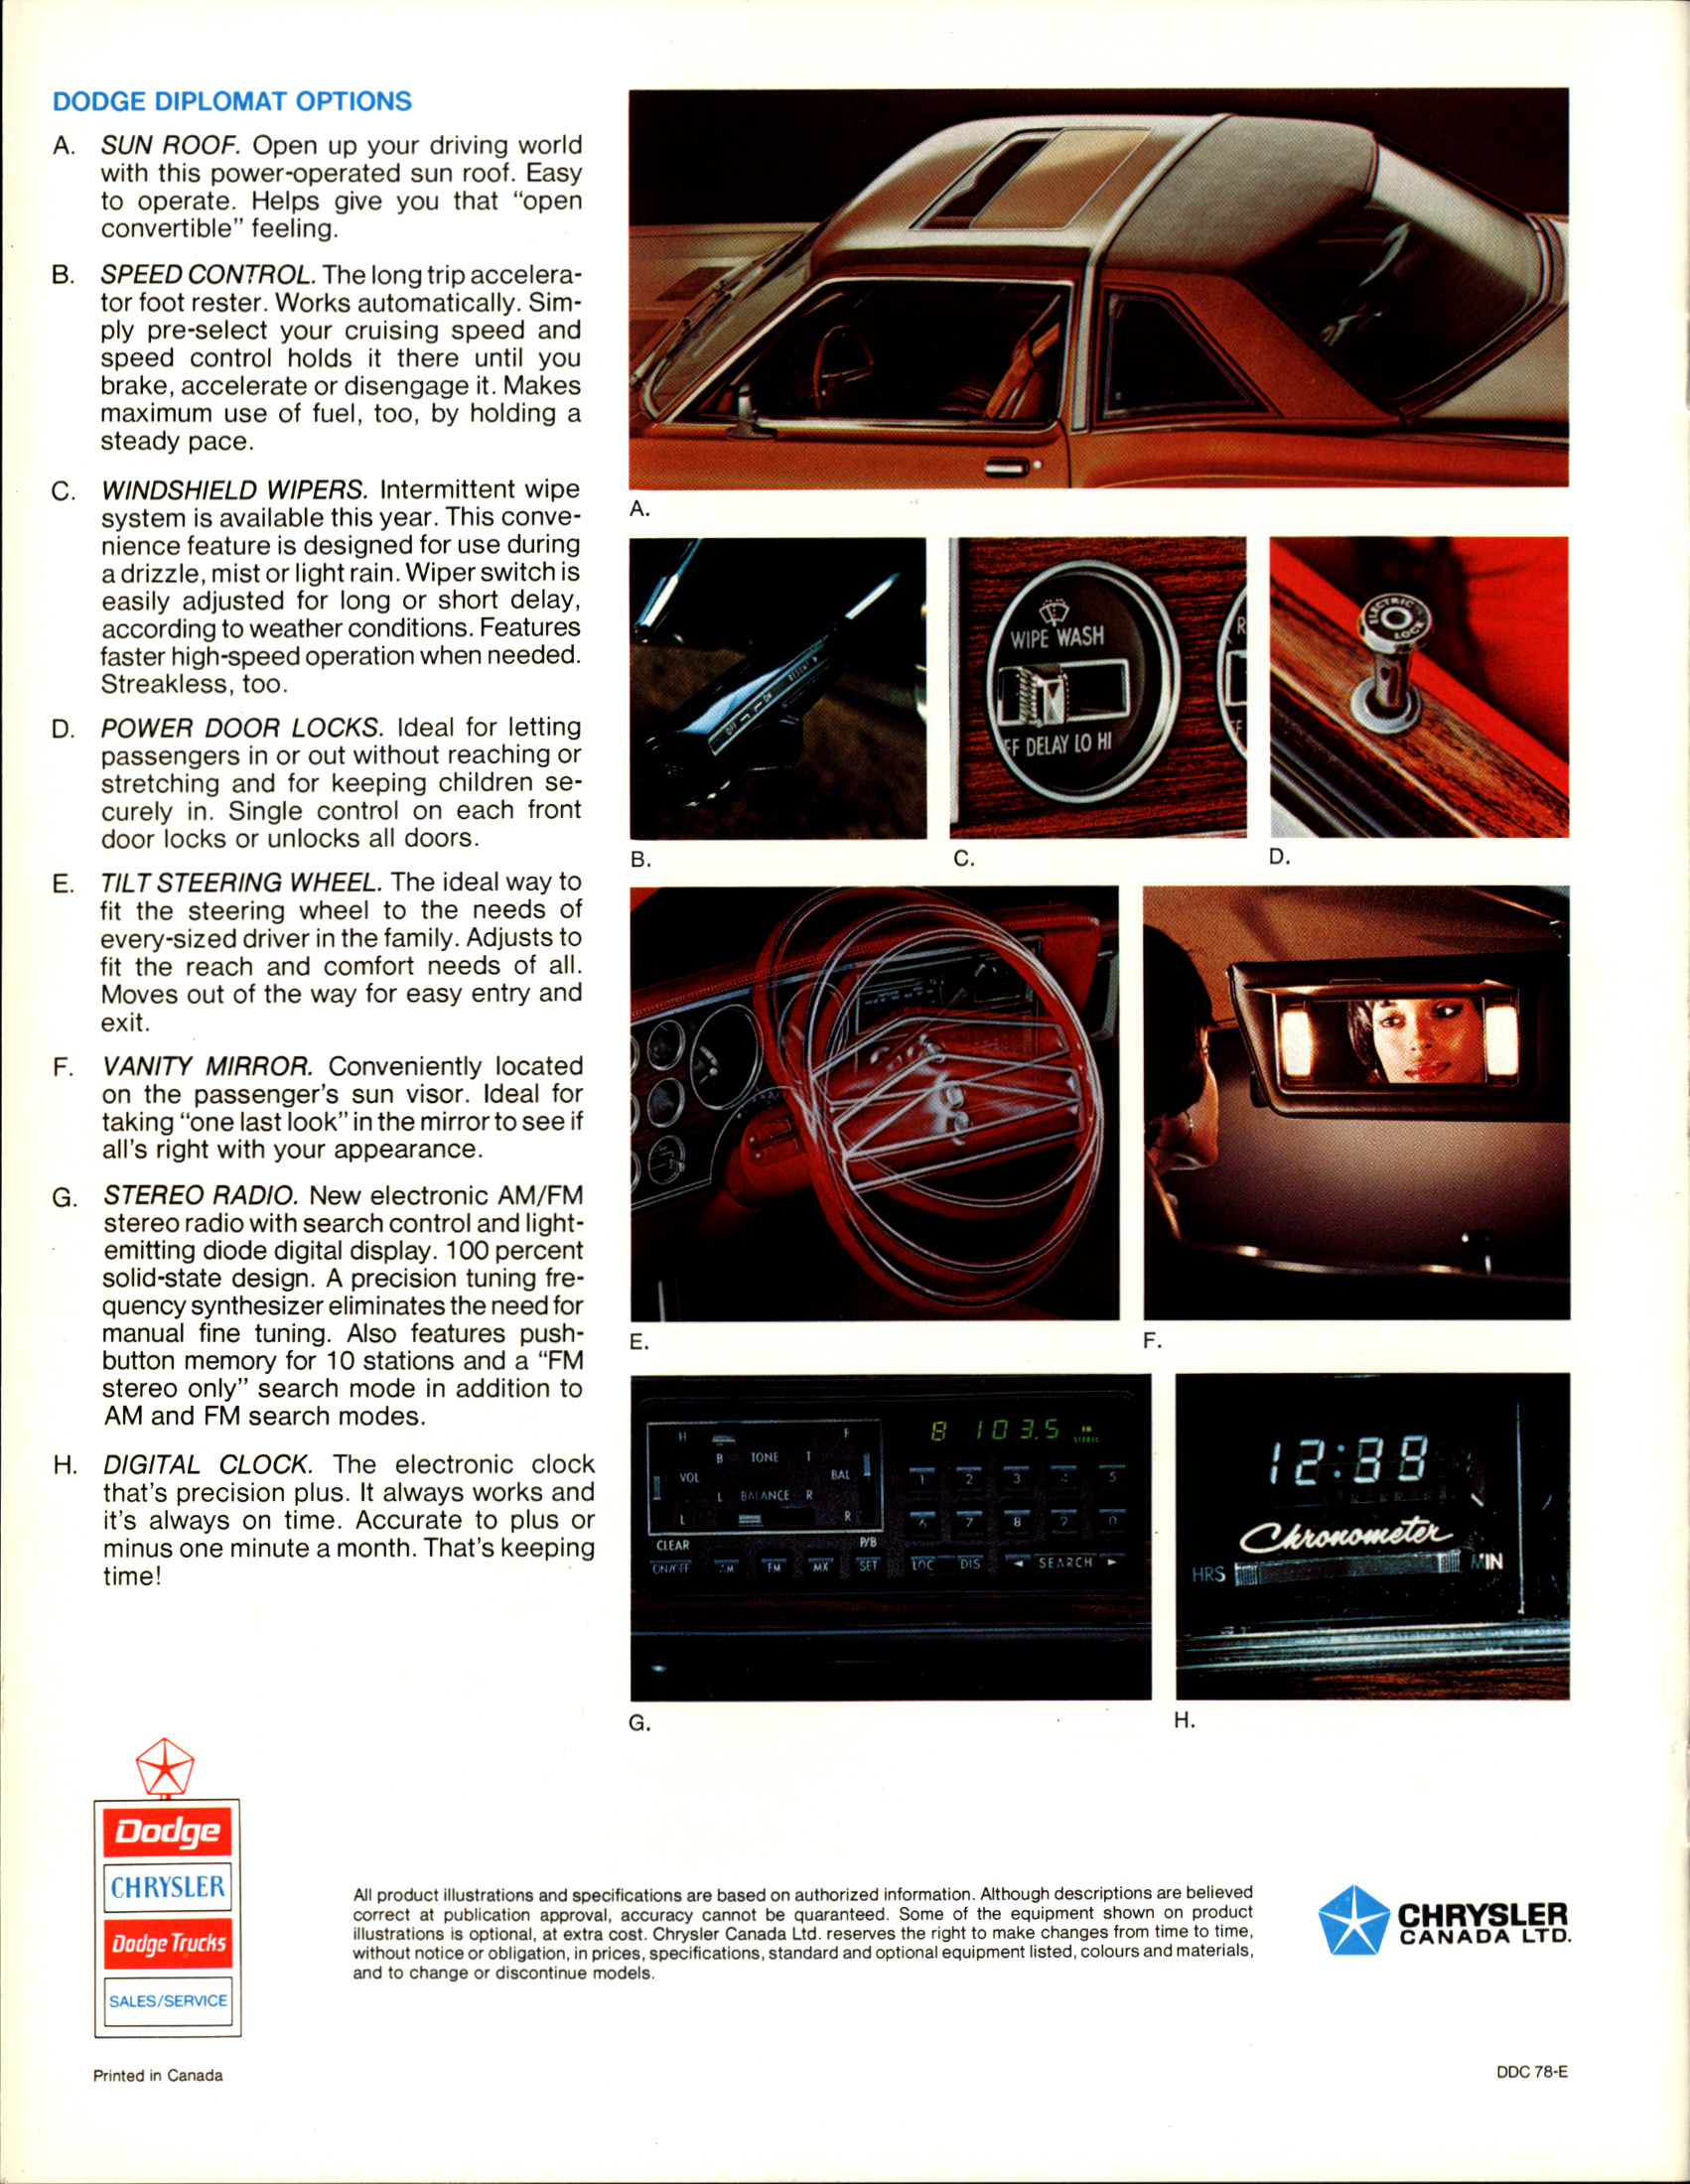 1978 Dodge Diplomat Brochure Canada 08